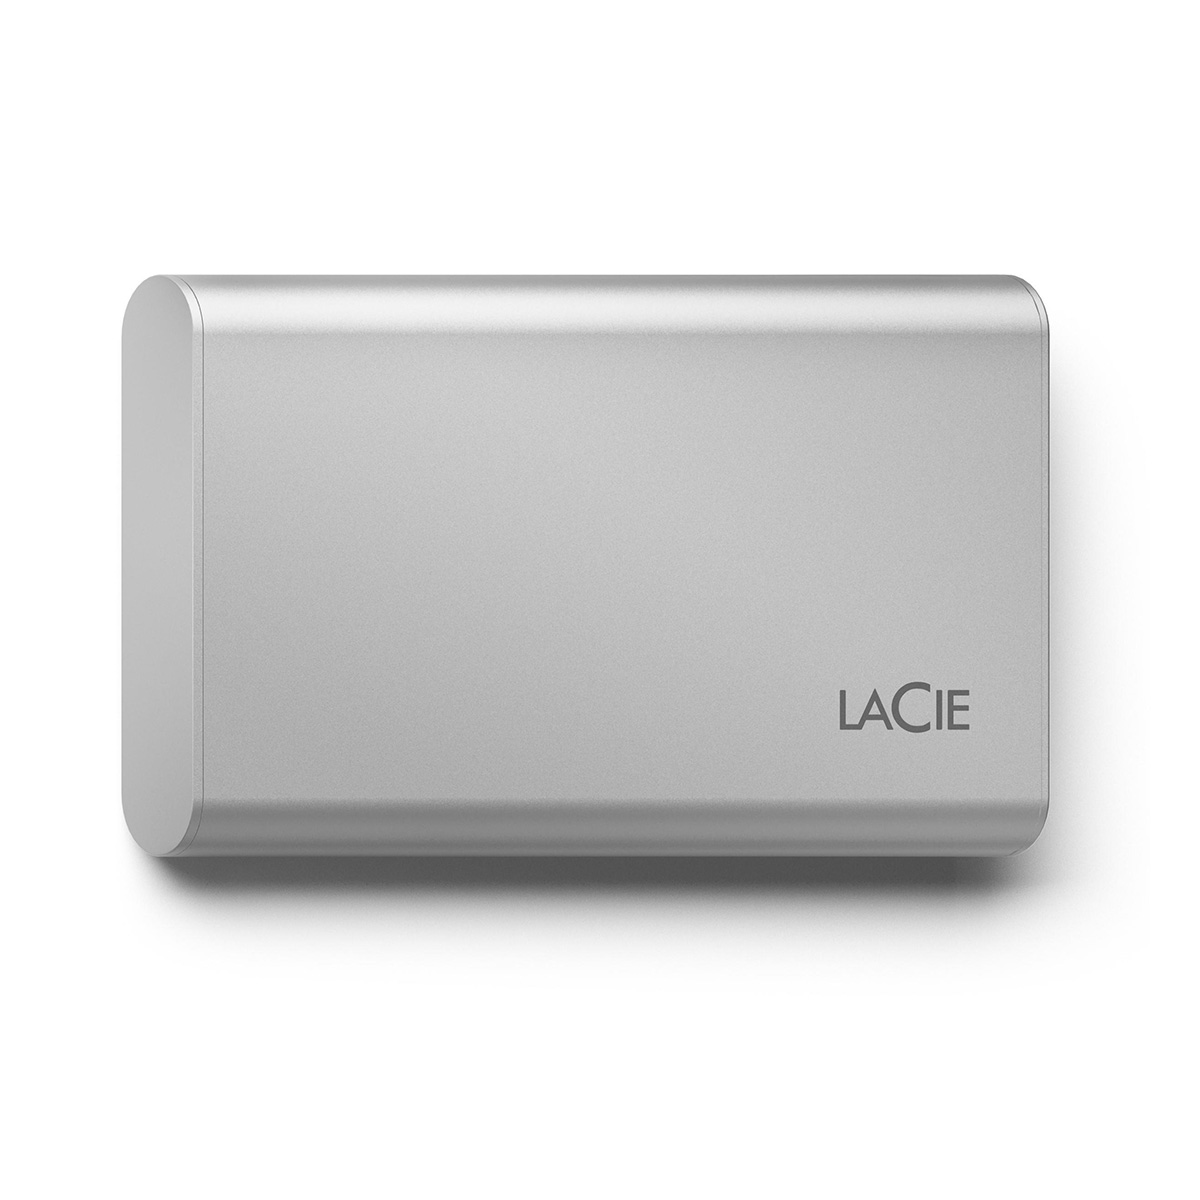 Ổ cứng SSD Lacie Portable 2021